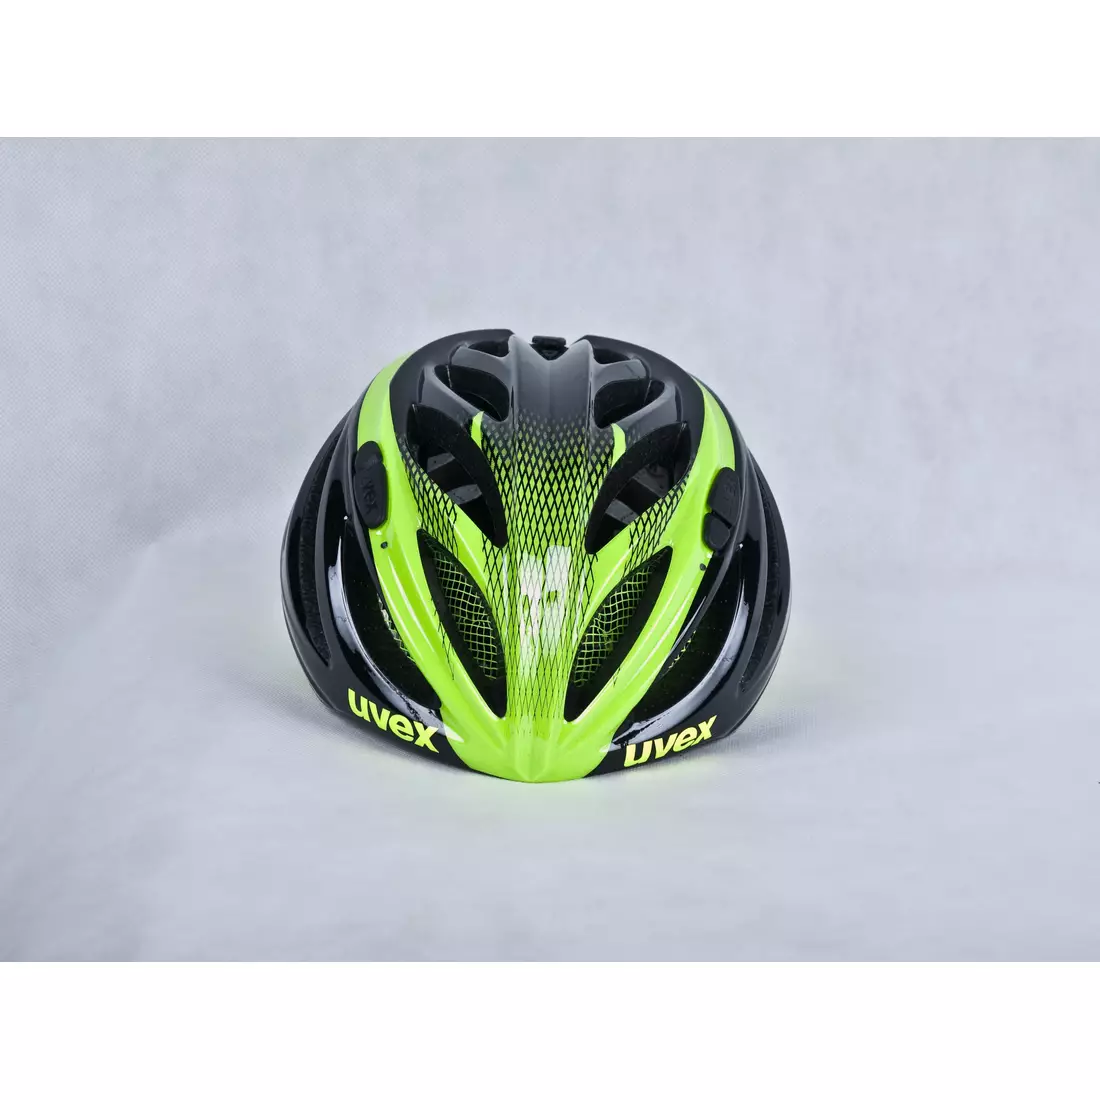 Casca de bicicleta UVEX BOSS RACE 41022916 negru galben neon